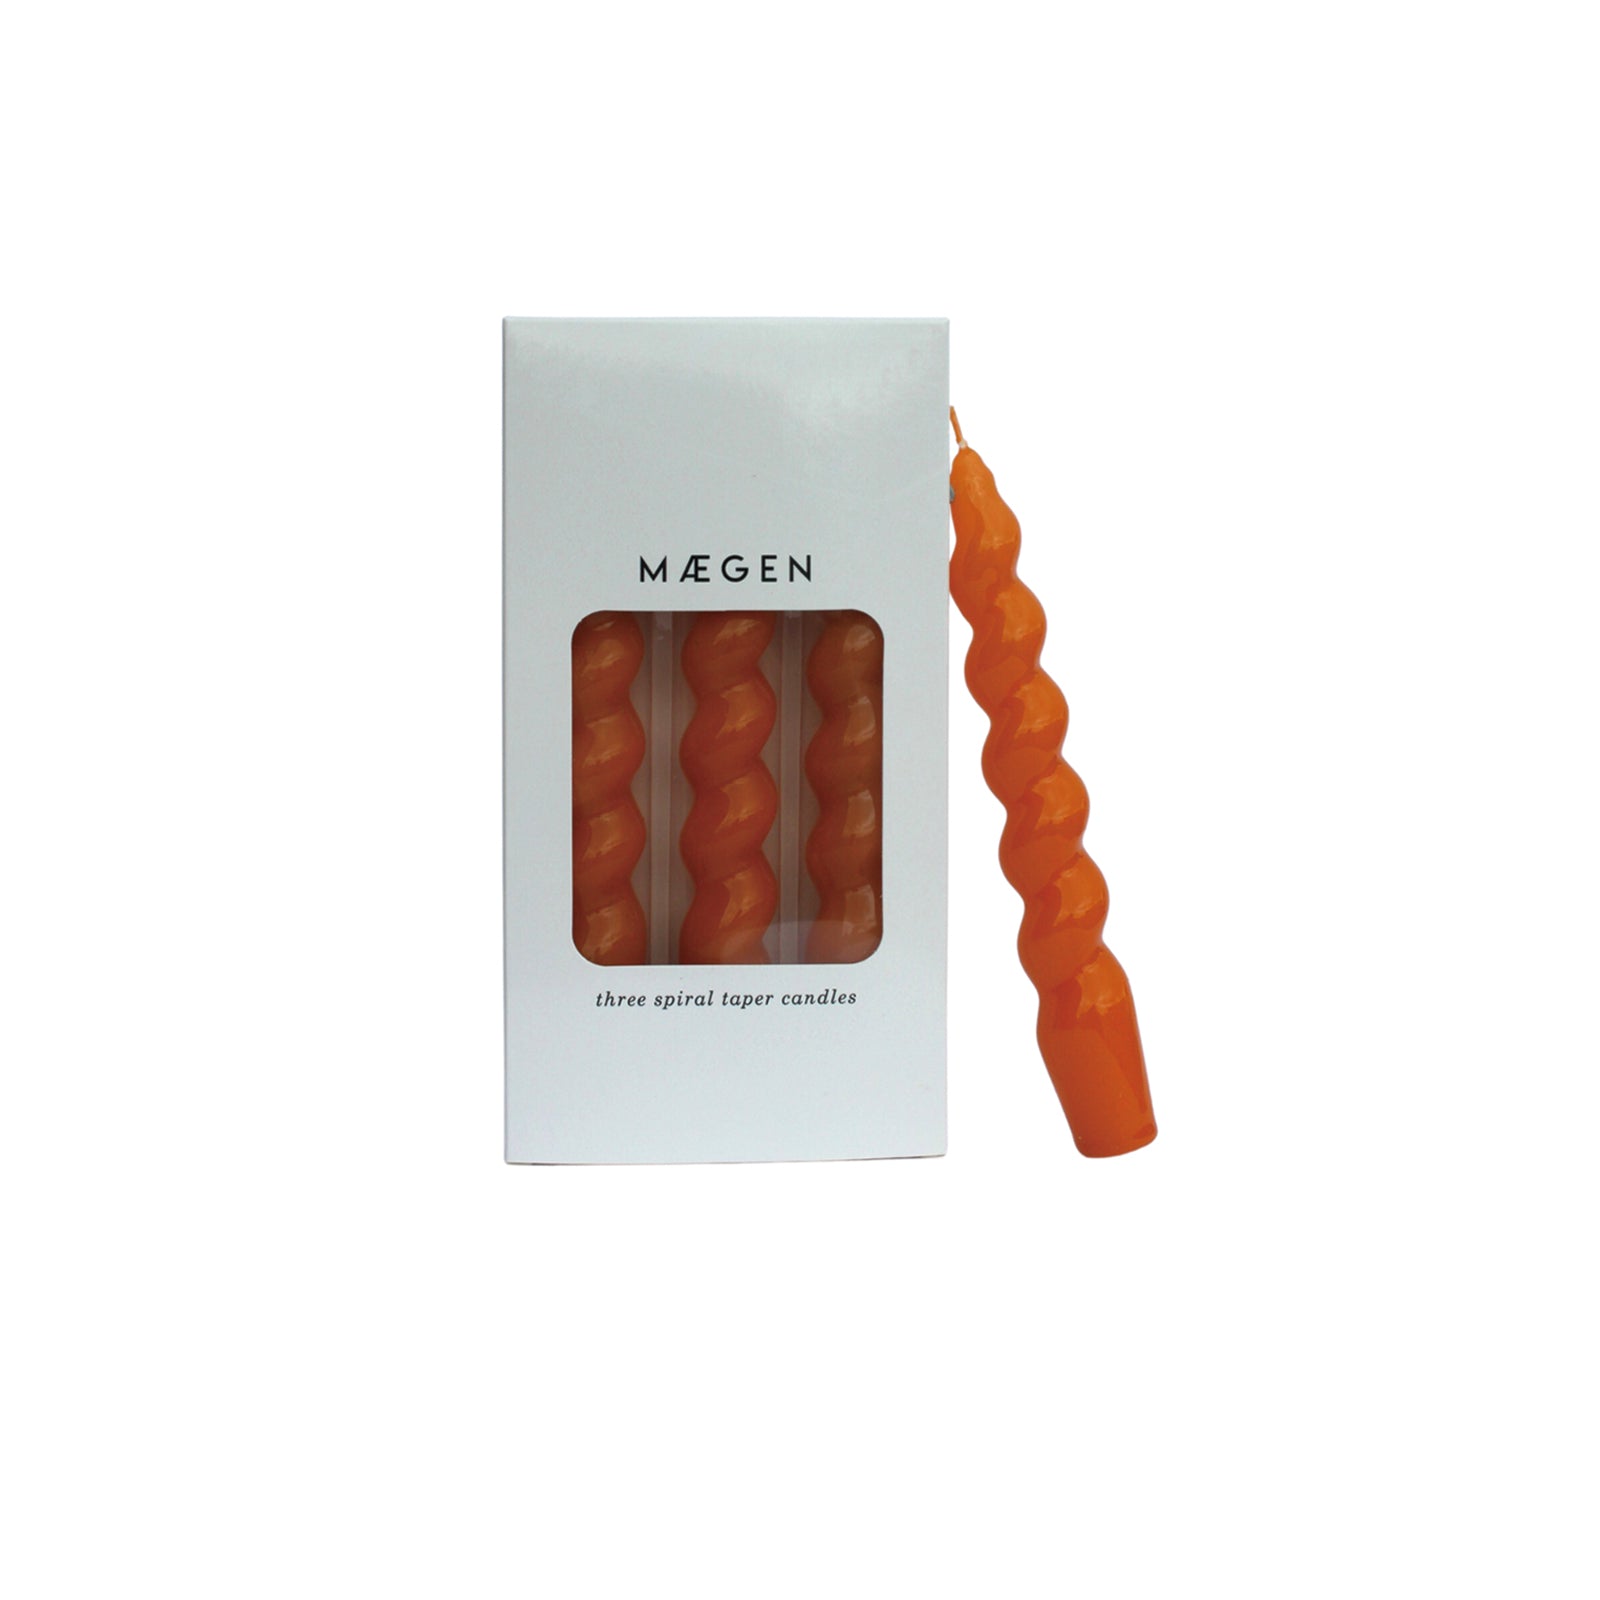 18cm Spiral Taper Candles - Tangerine 3 pack